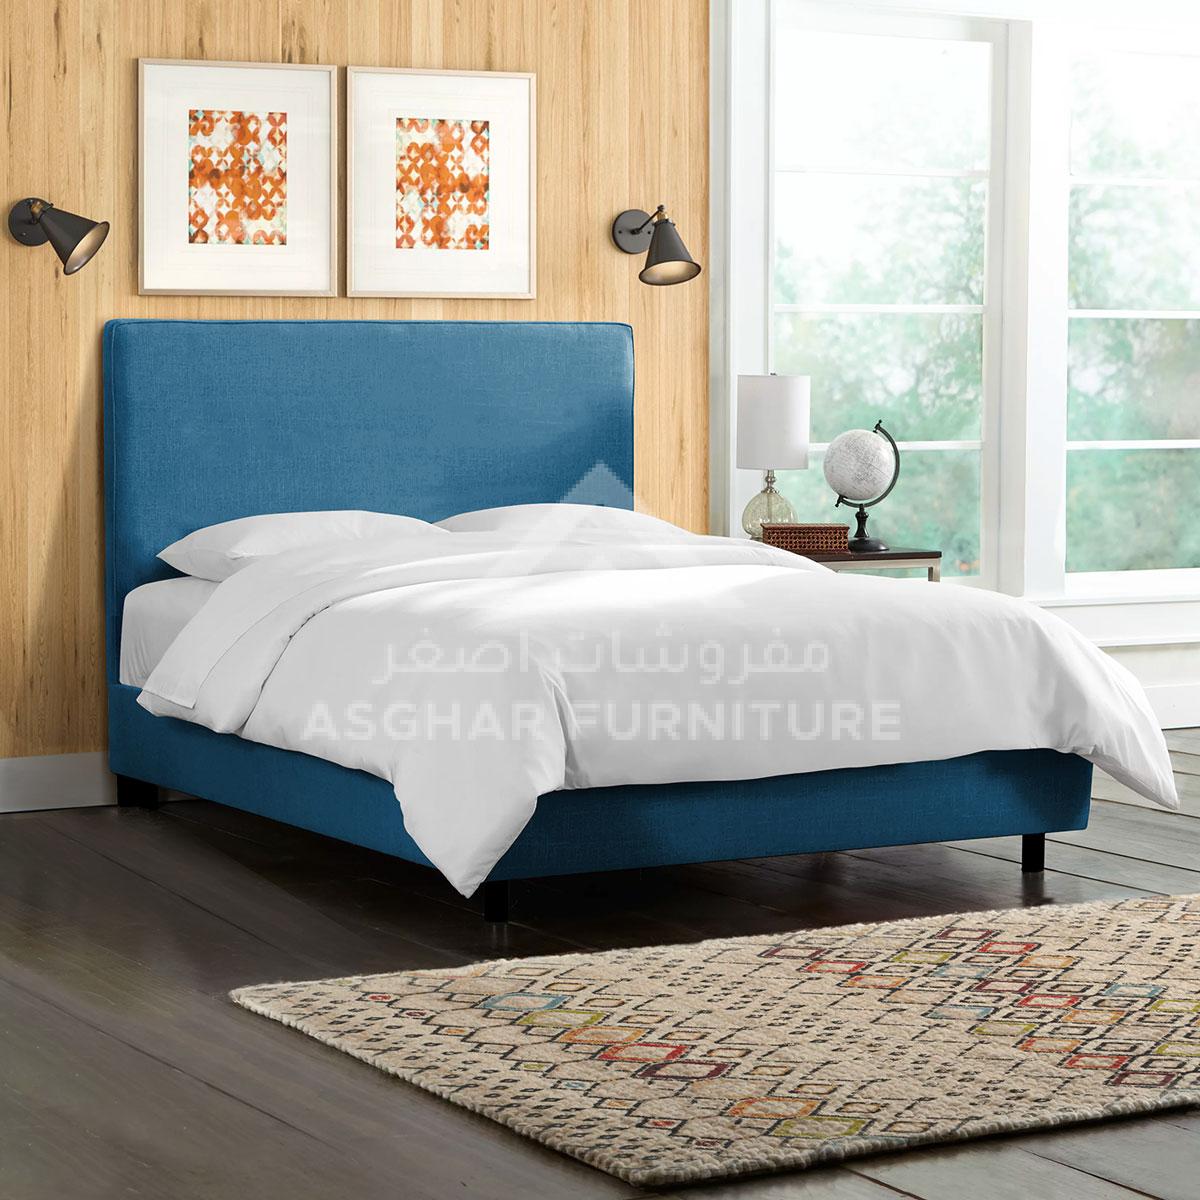 Elementary upholstered bed | beds furniture online